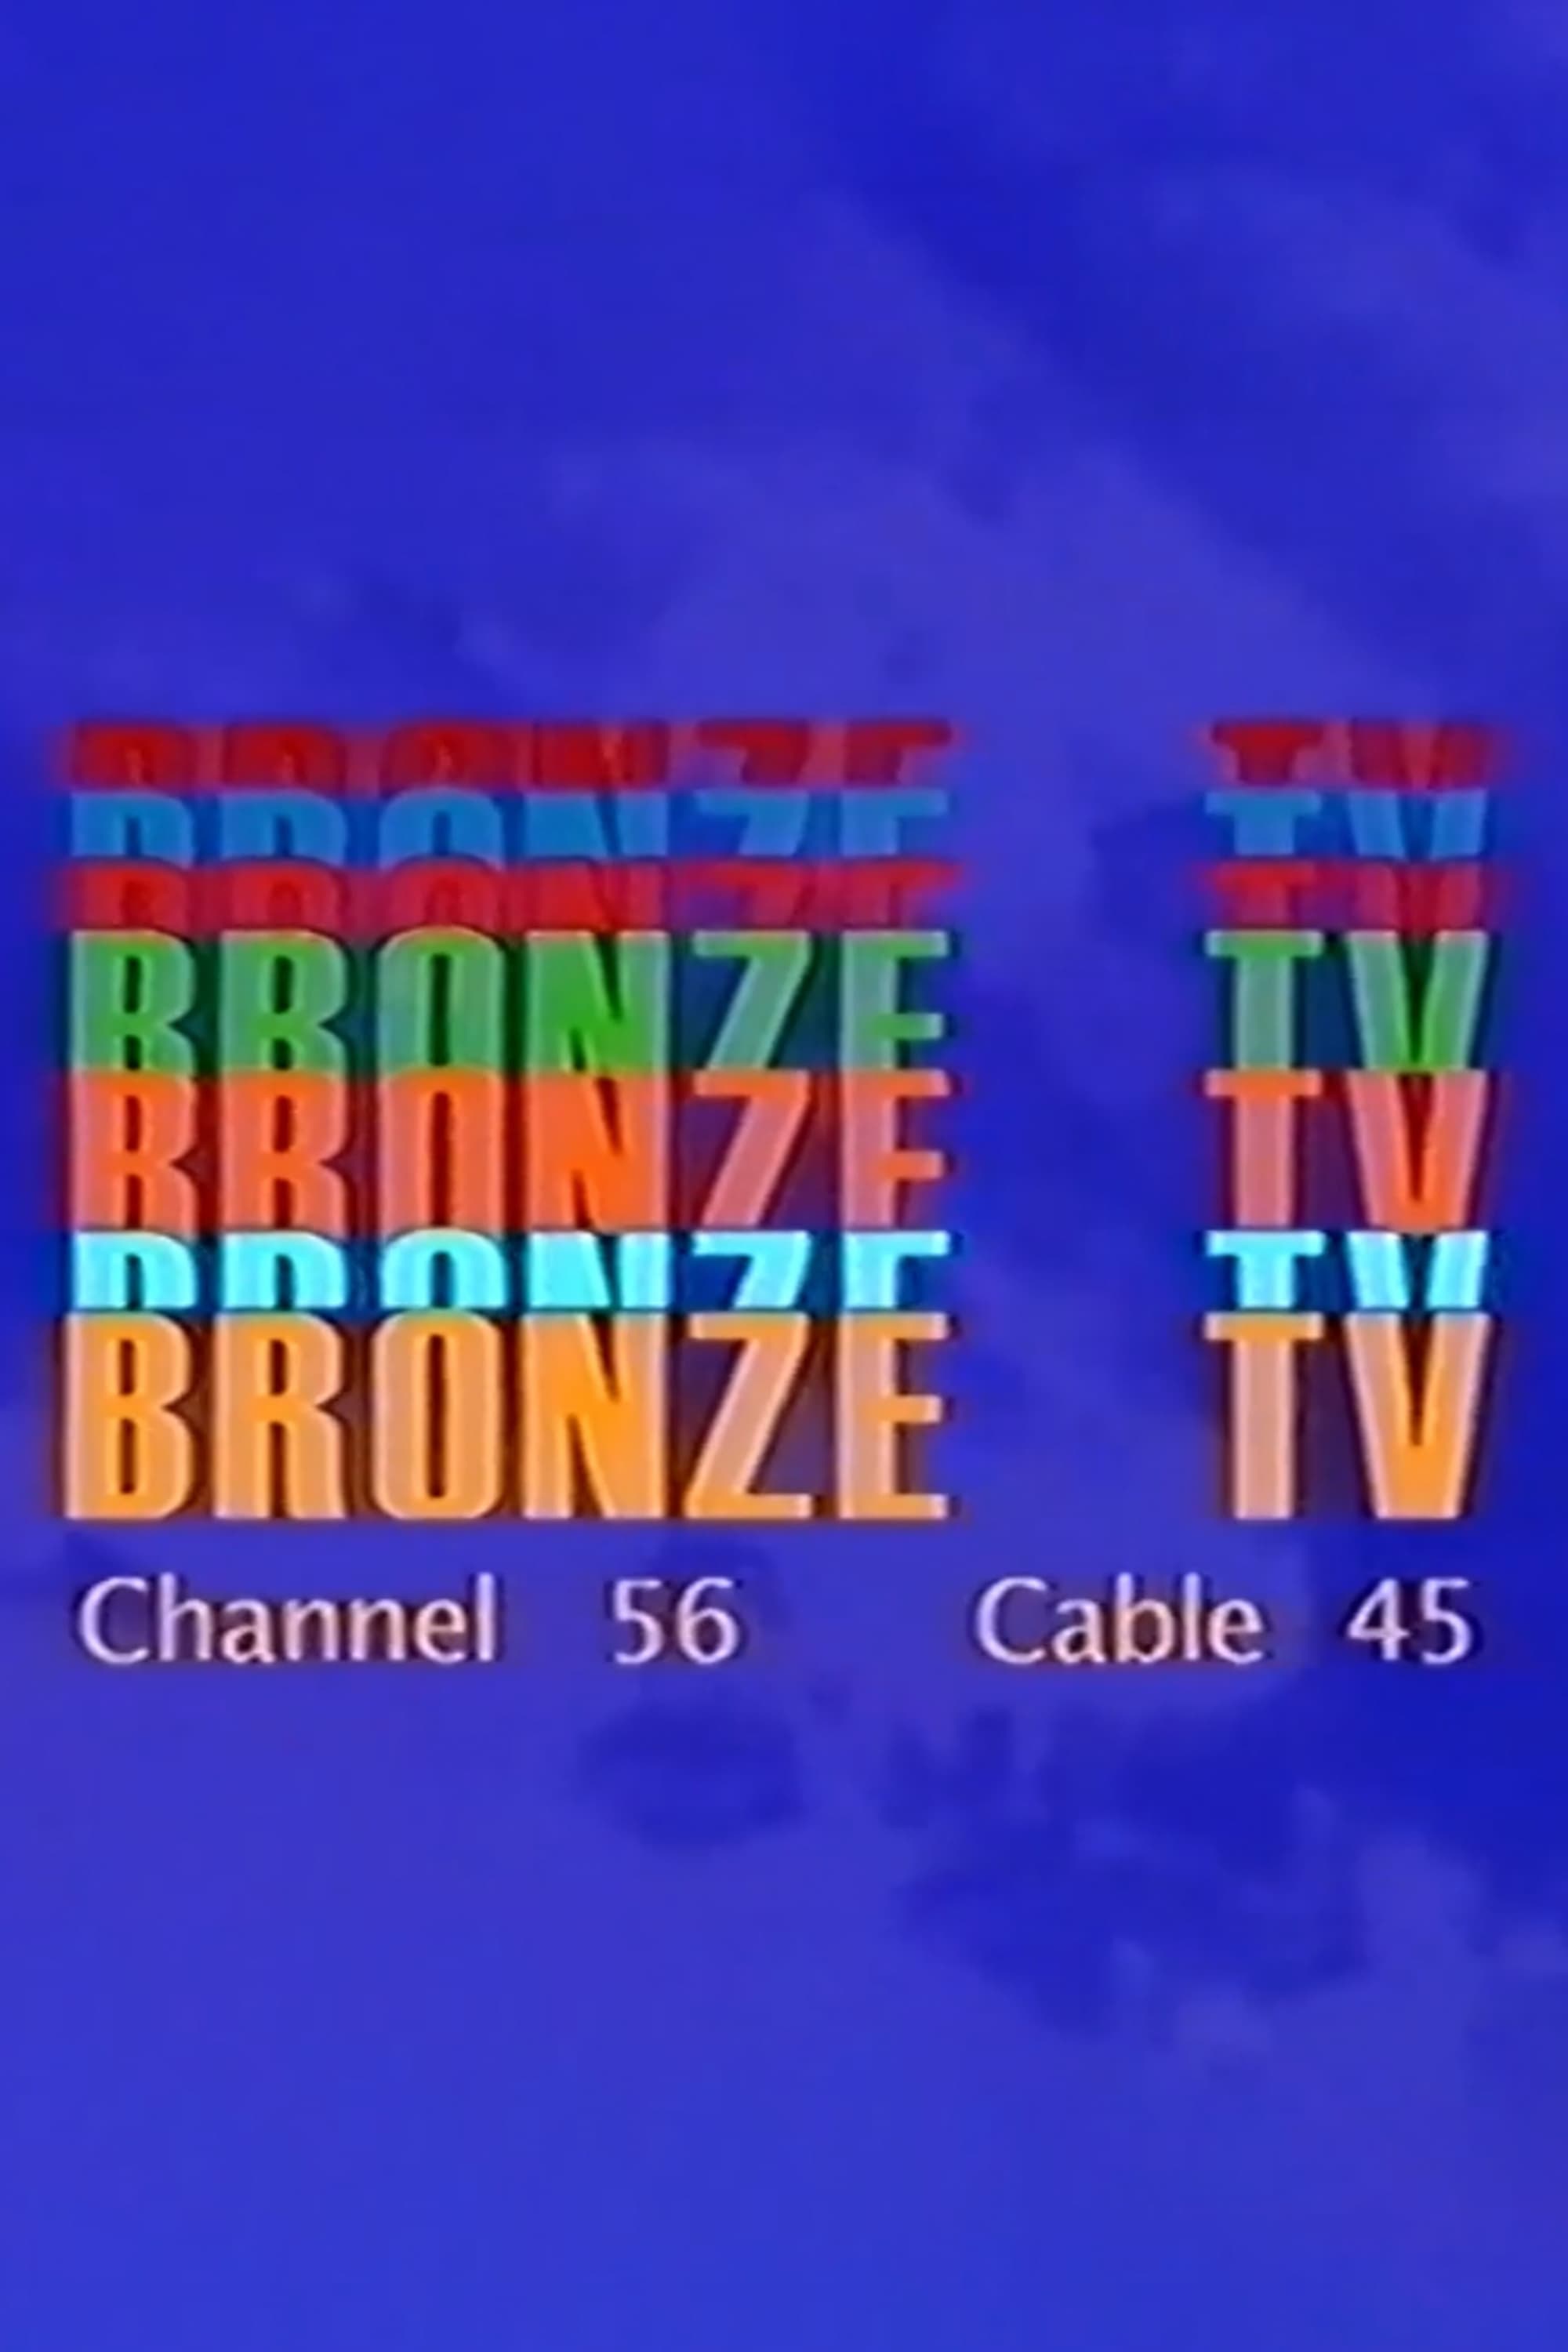 Bronze TV Channel 56 8/17/23